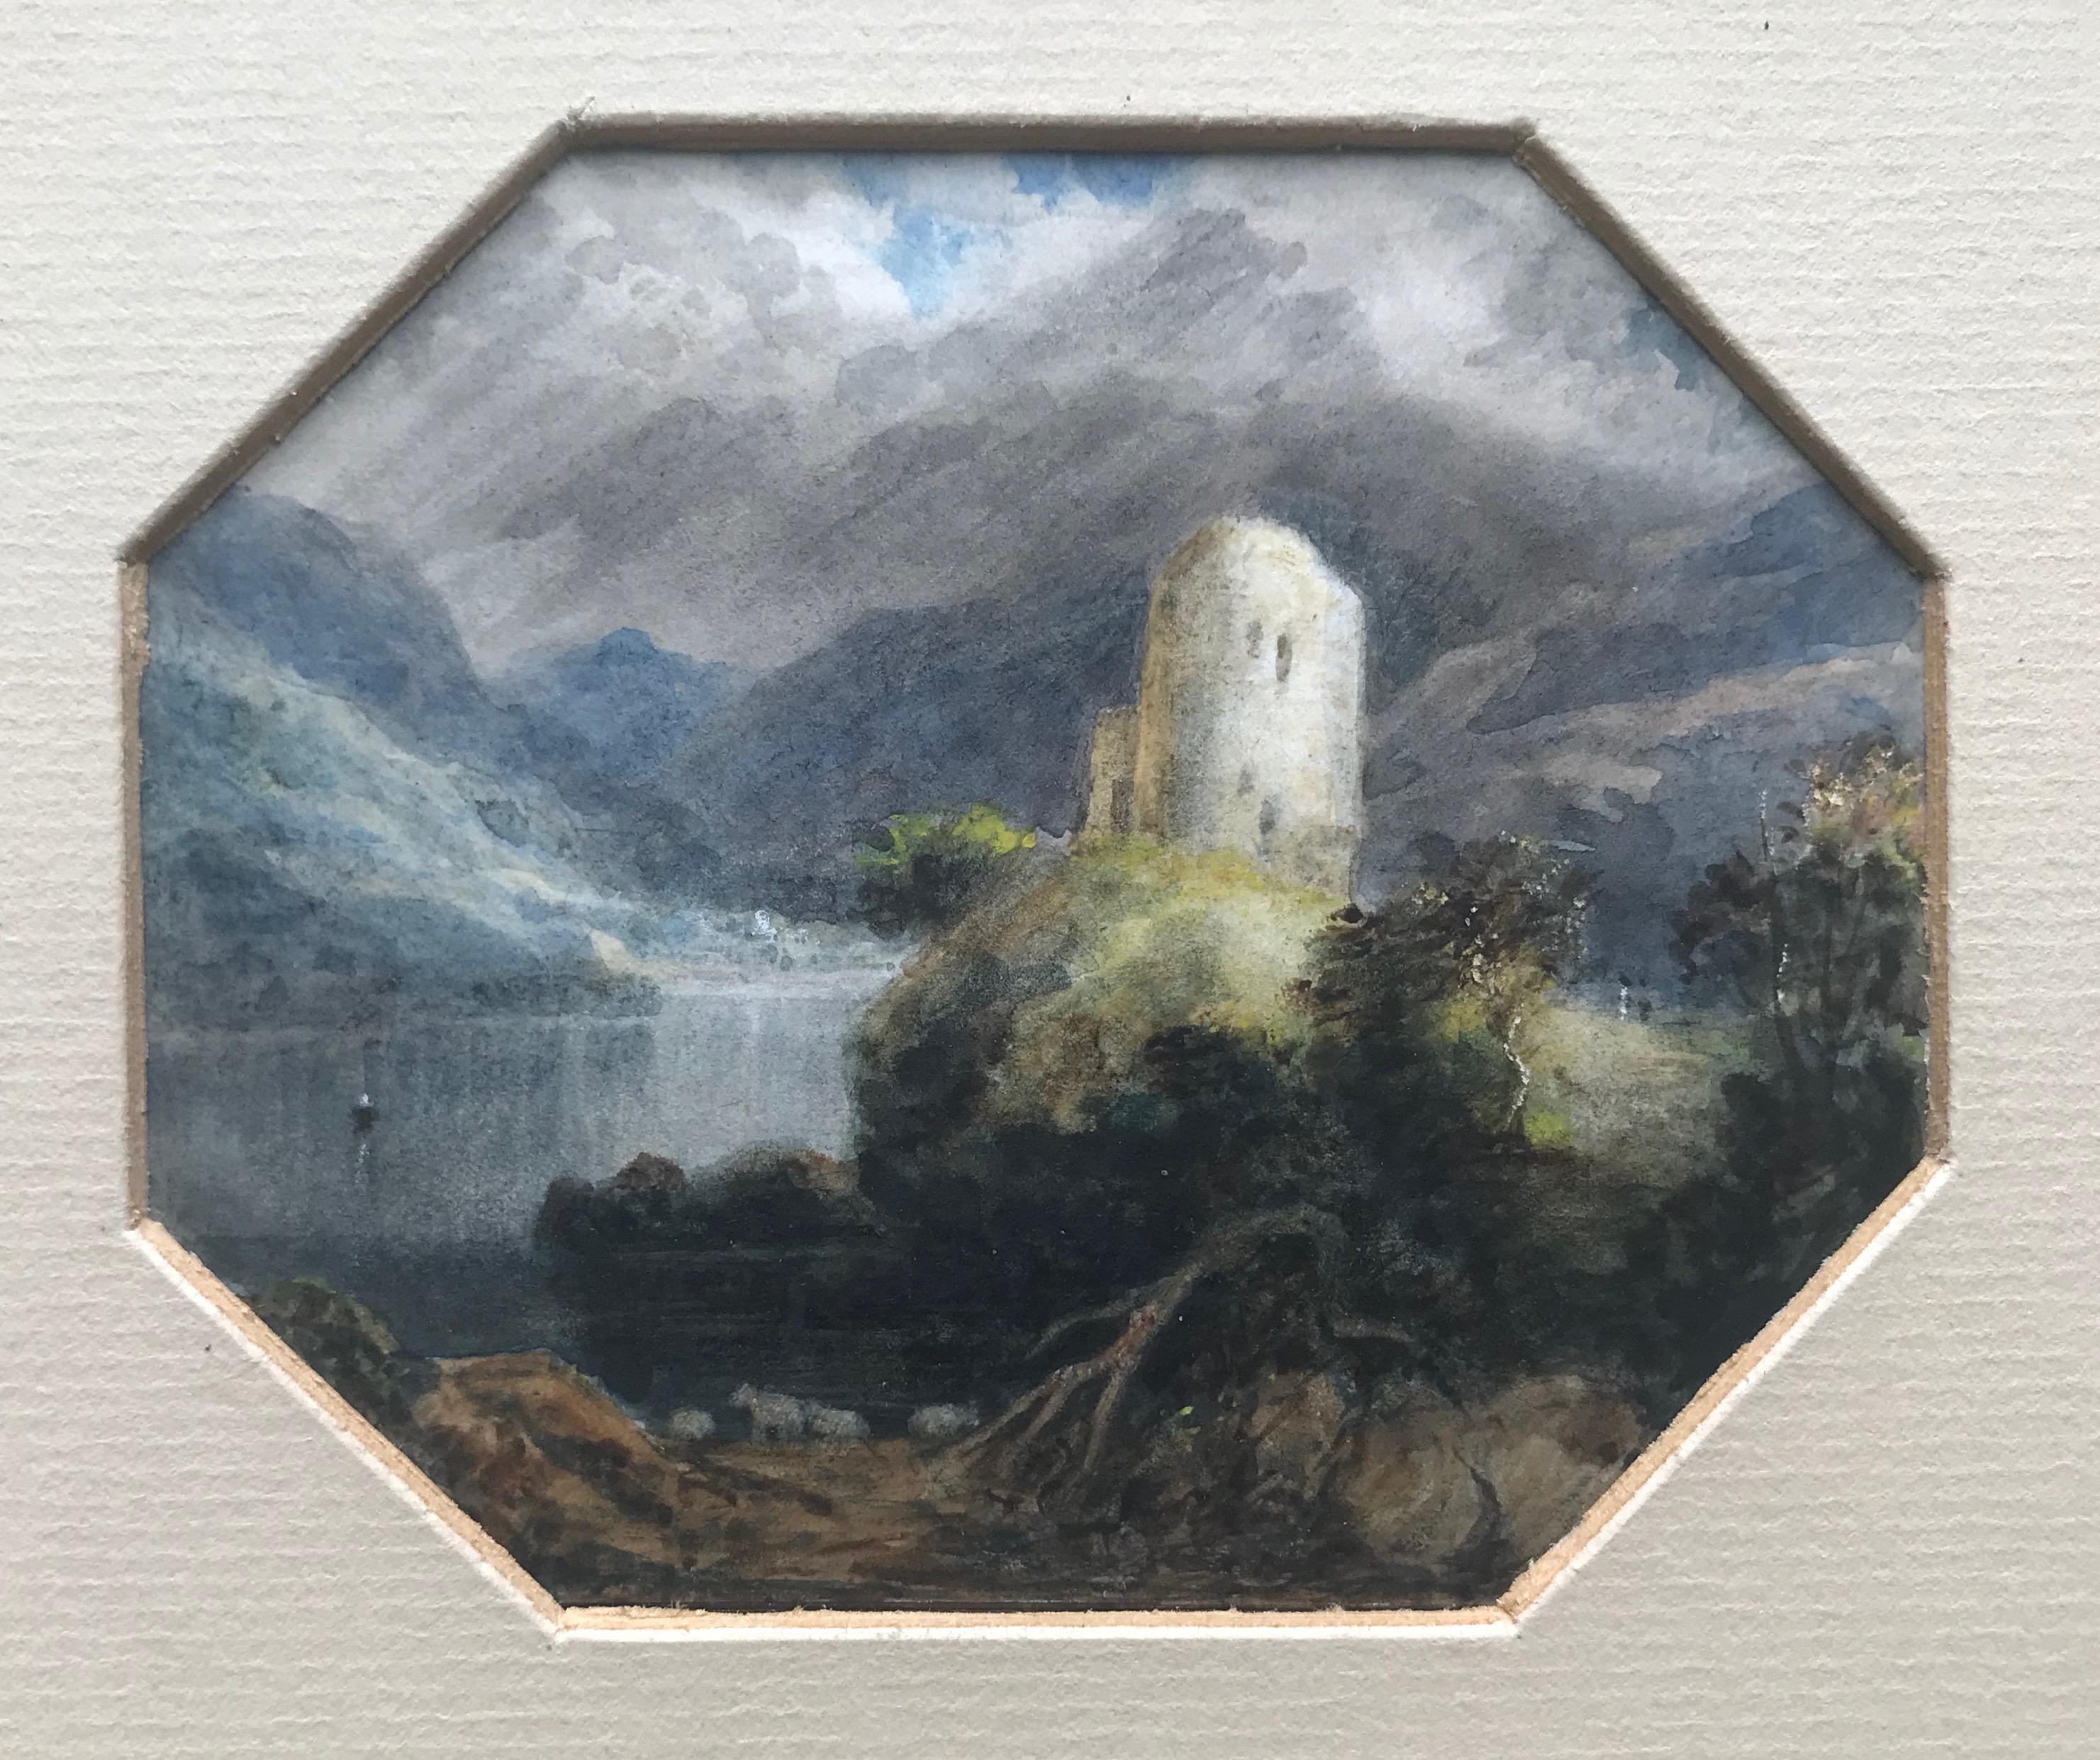 (Circle of) Joseph Mallord William Turner Landscape Art - 19th Century Romantic watercolor, Follower of JMW Turner, The castle on the loch